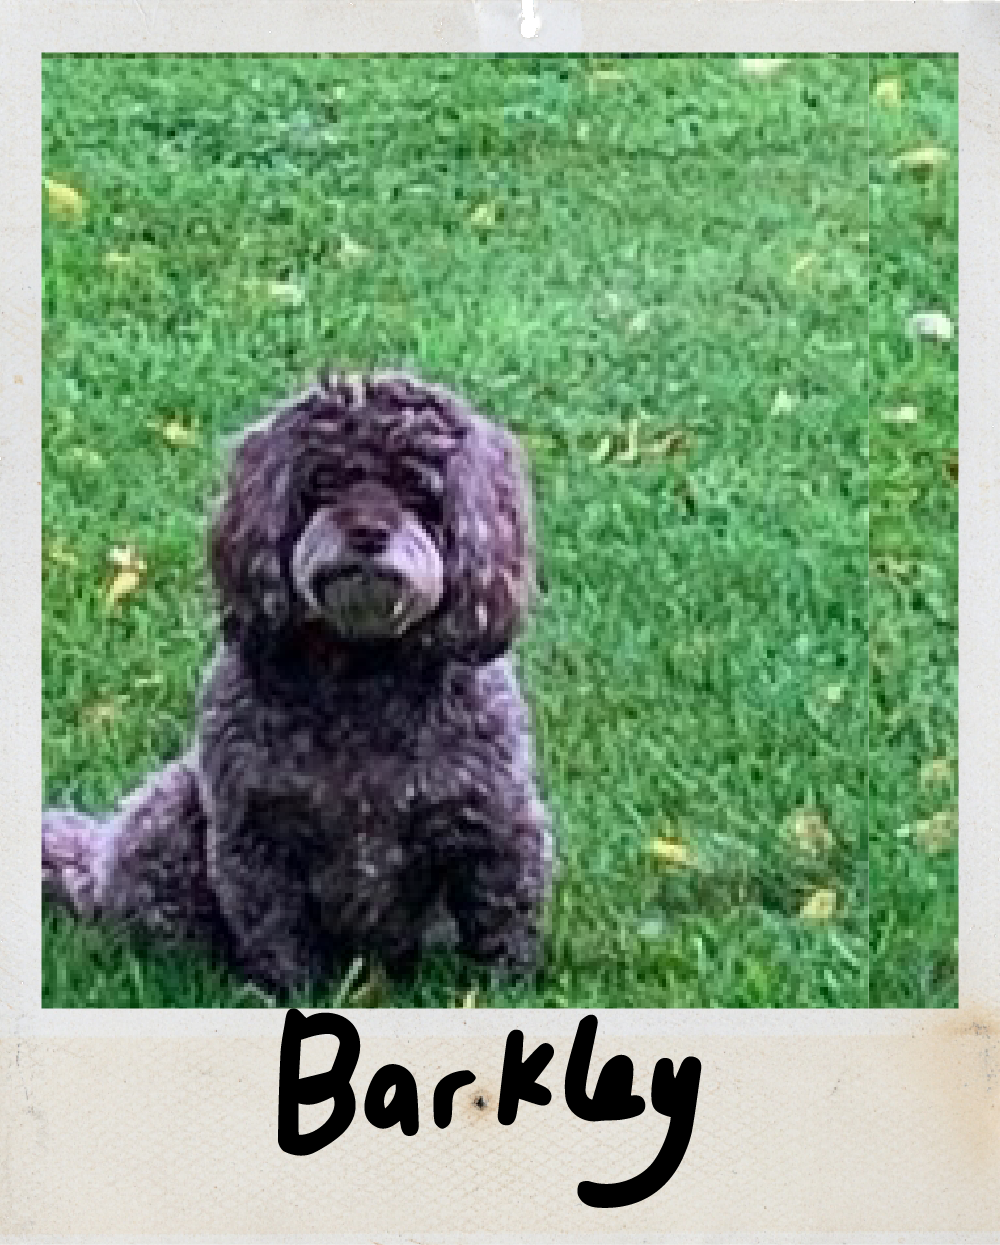 Barkley the dog is a Havanese/Maltese mix.